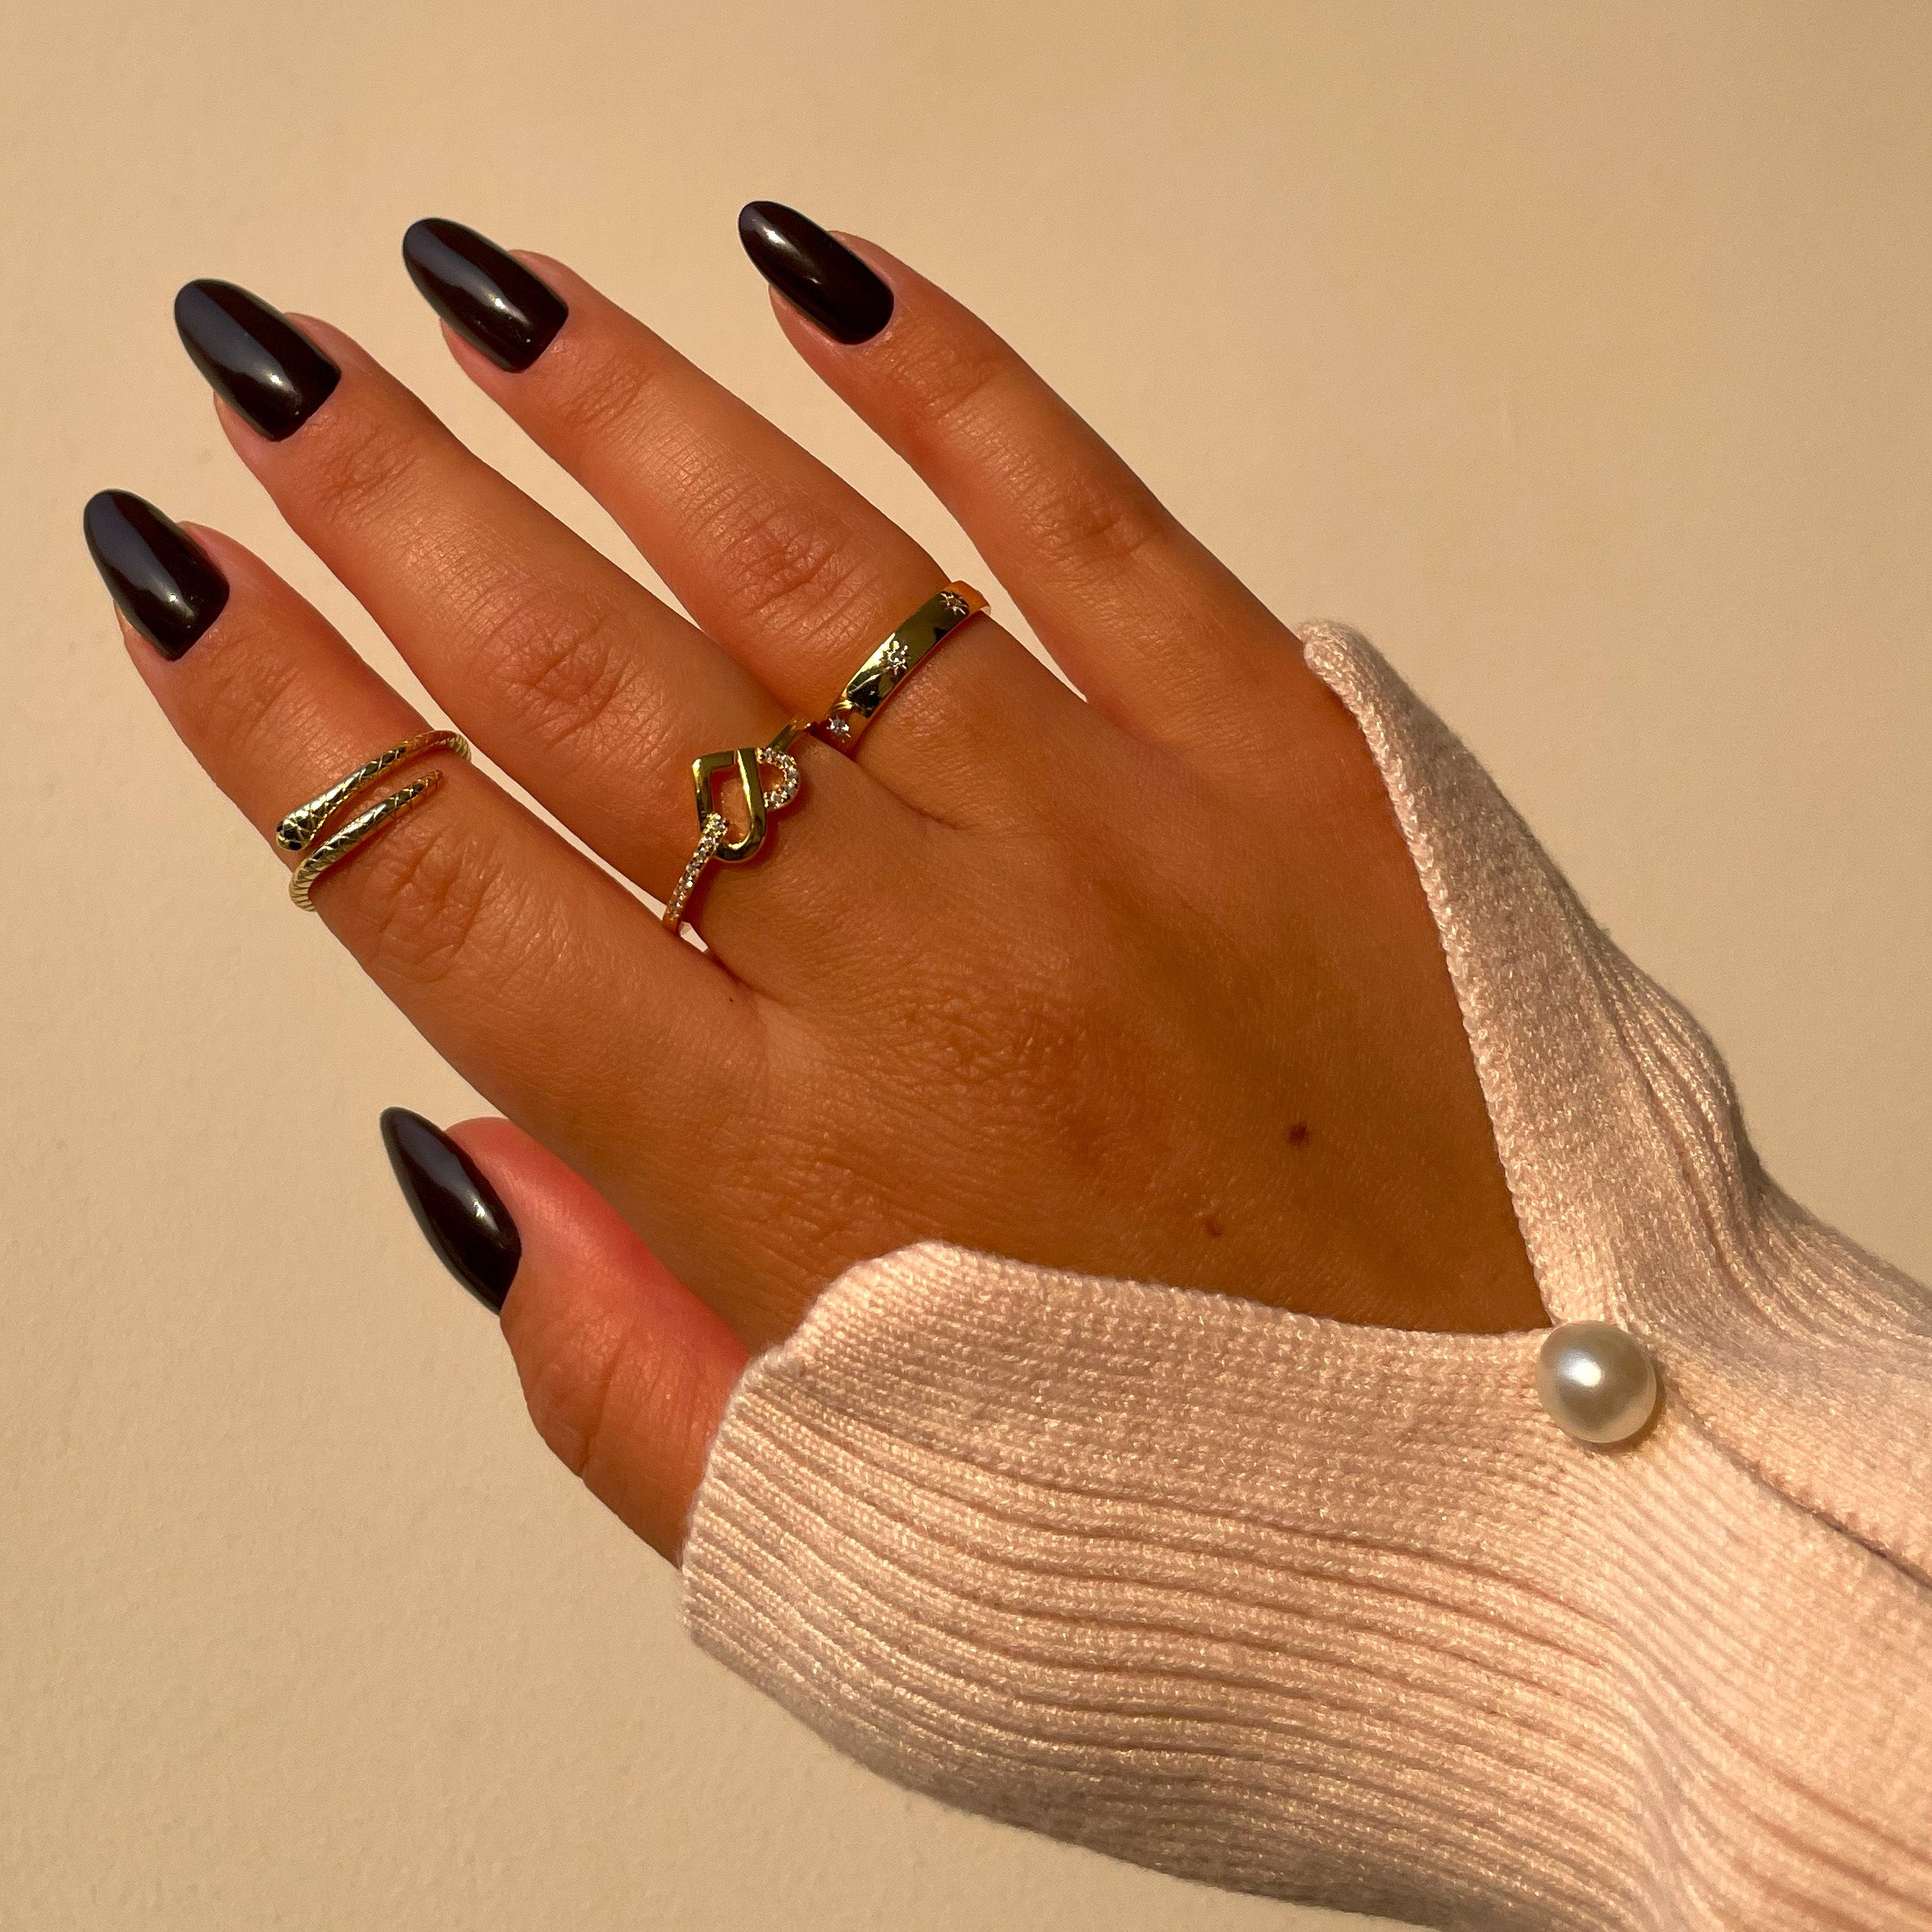 Beautiful rings on stylish hands.